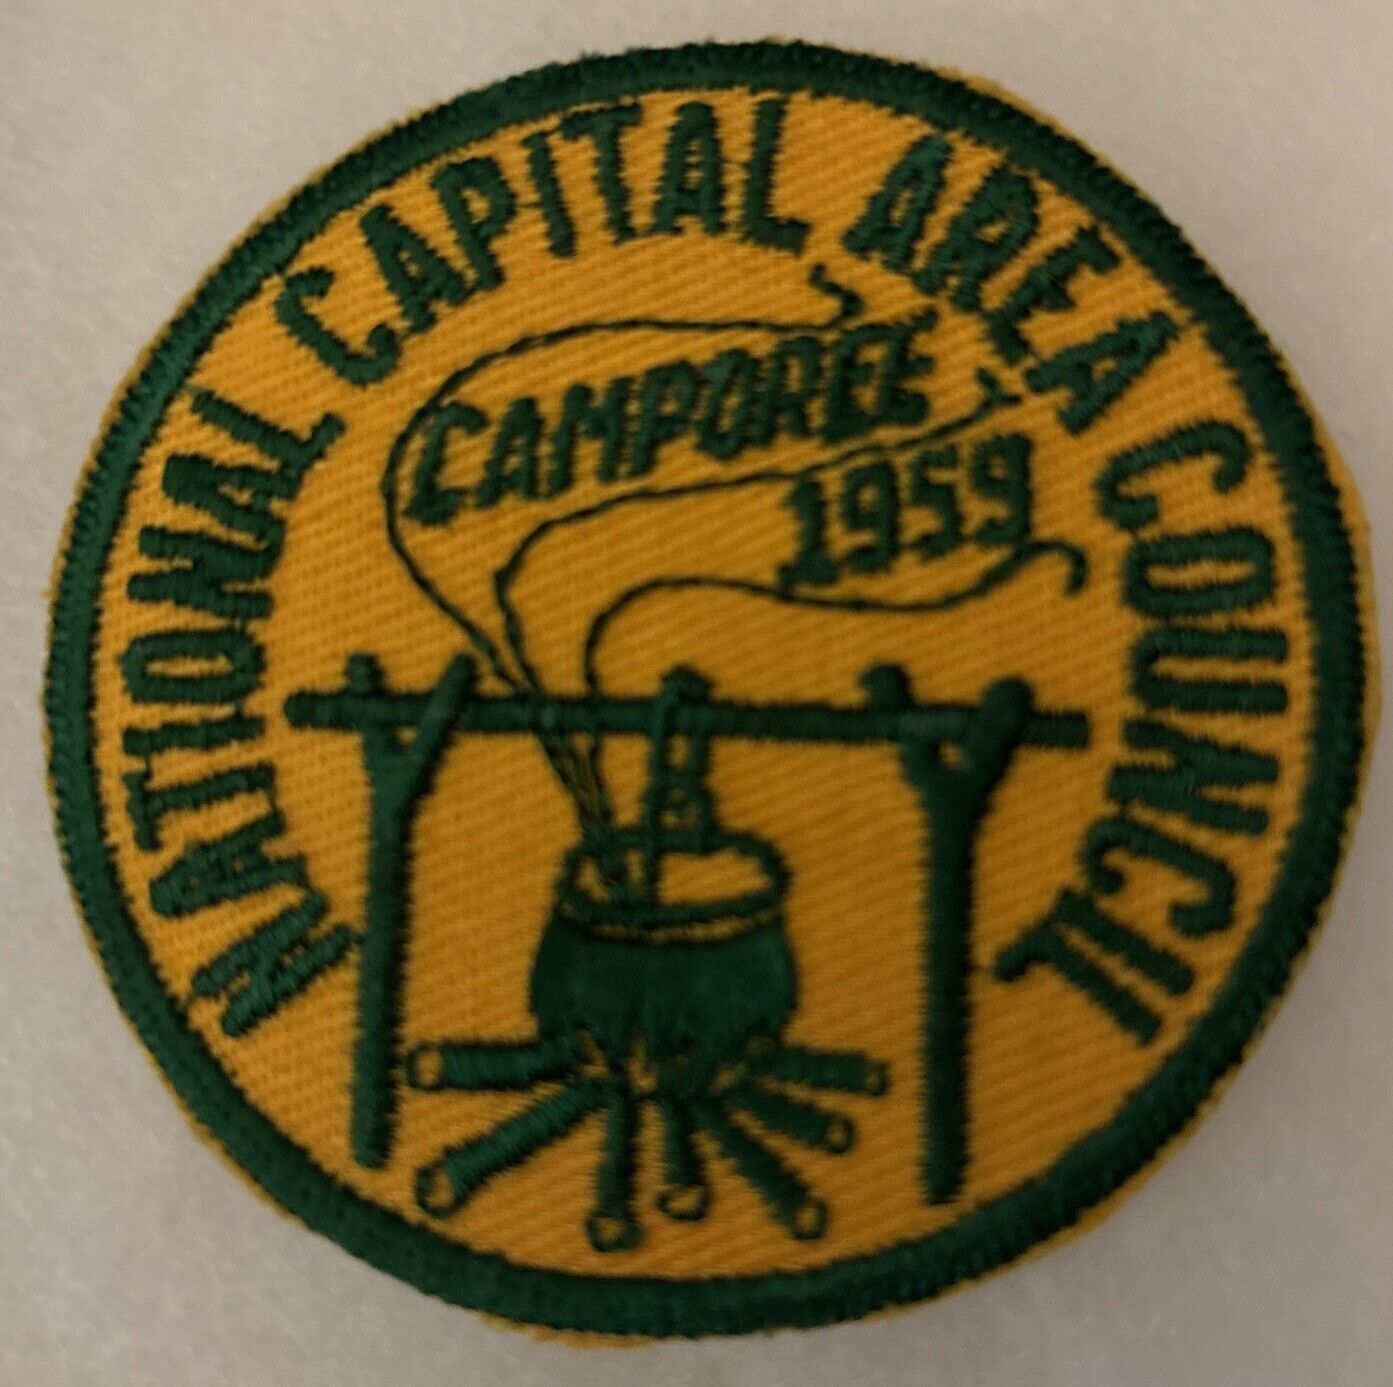 1959 National Capital Area Council Camporee